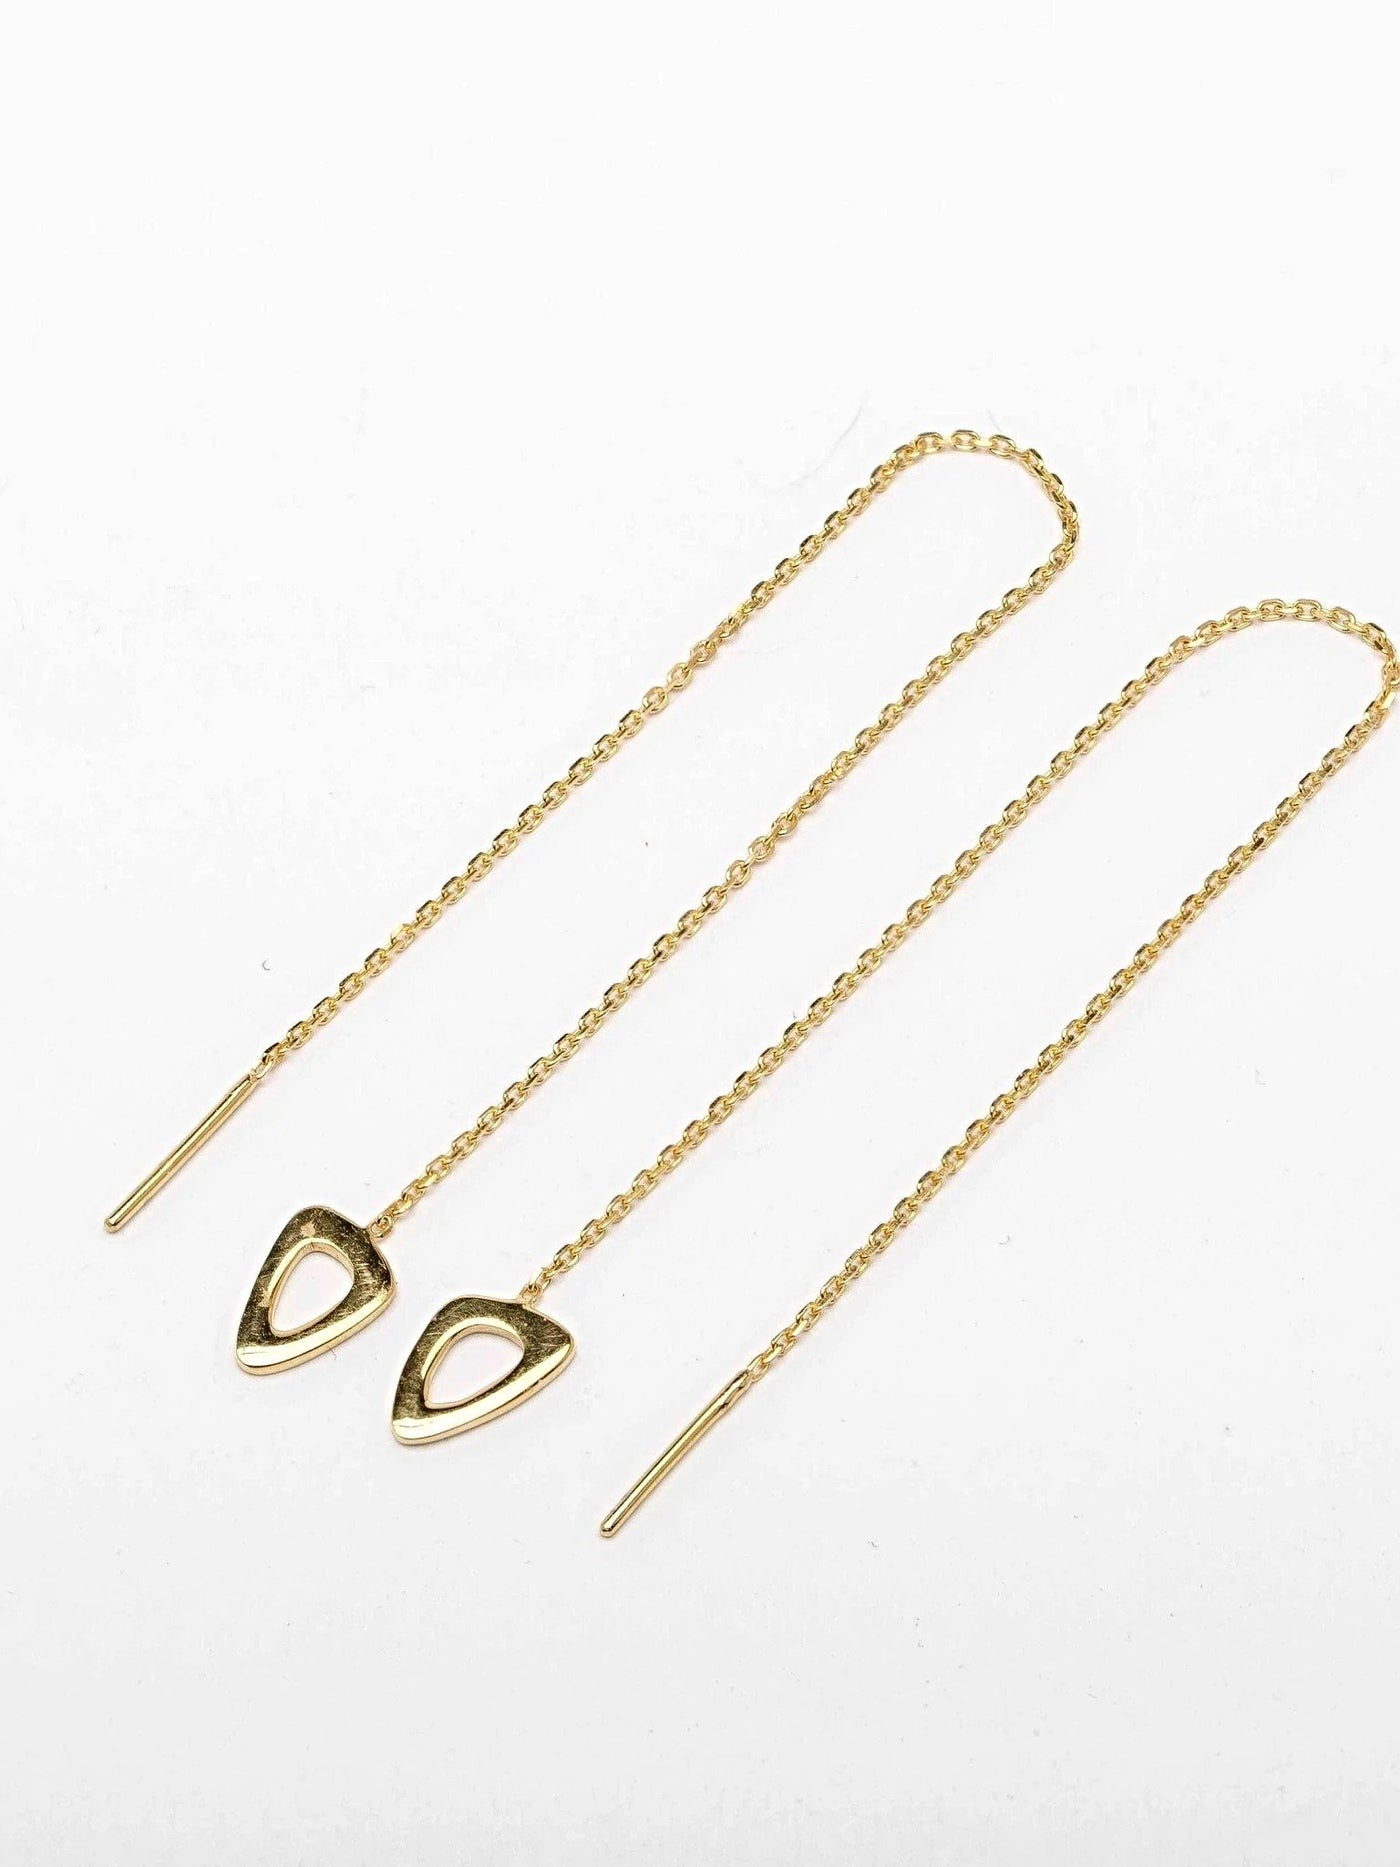 Jayne Threader Earrings - 24K Gold PlatedBackUpItemsChain Drop EarringsLunai Jewelry